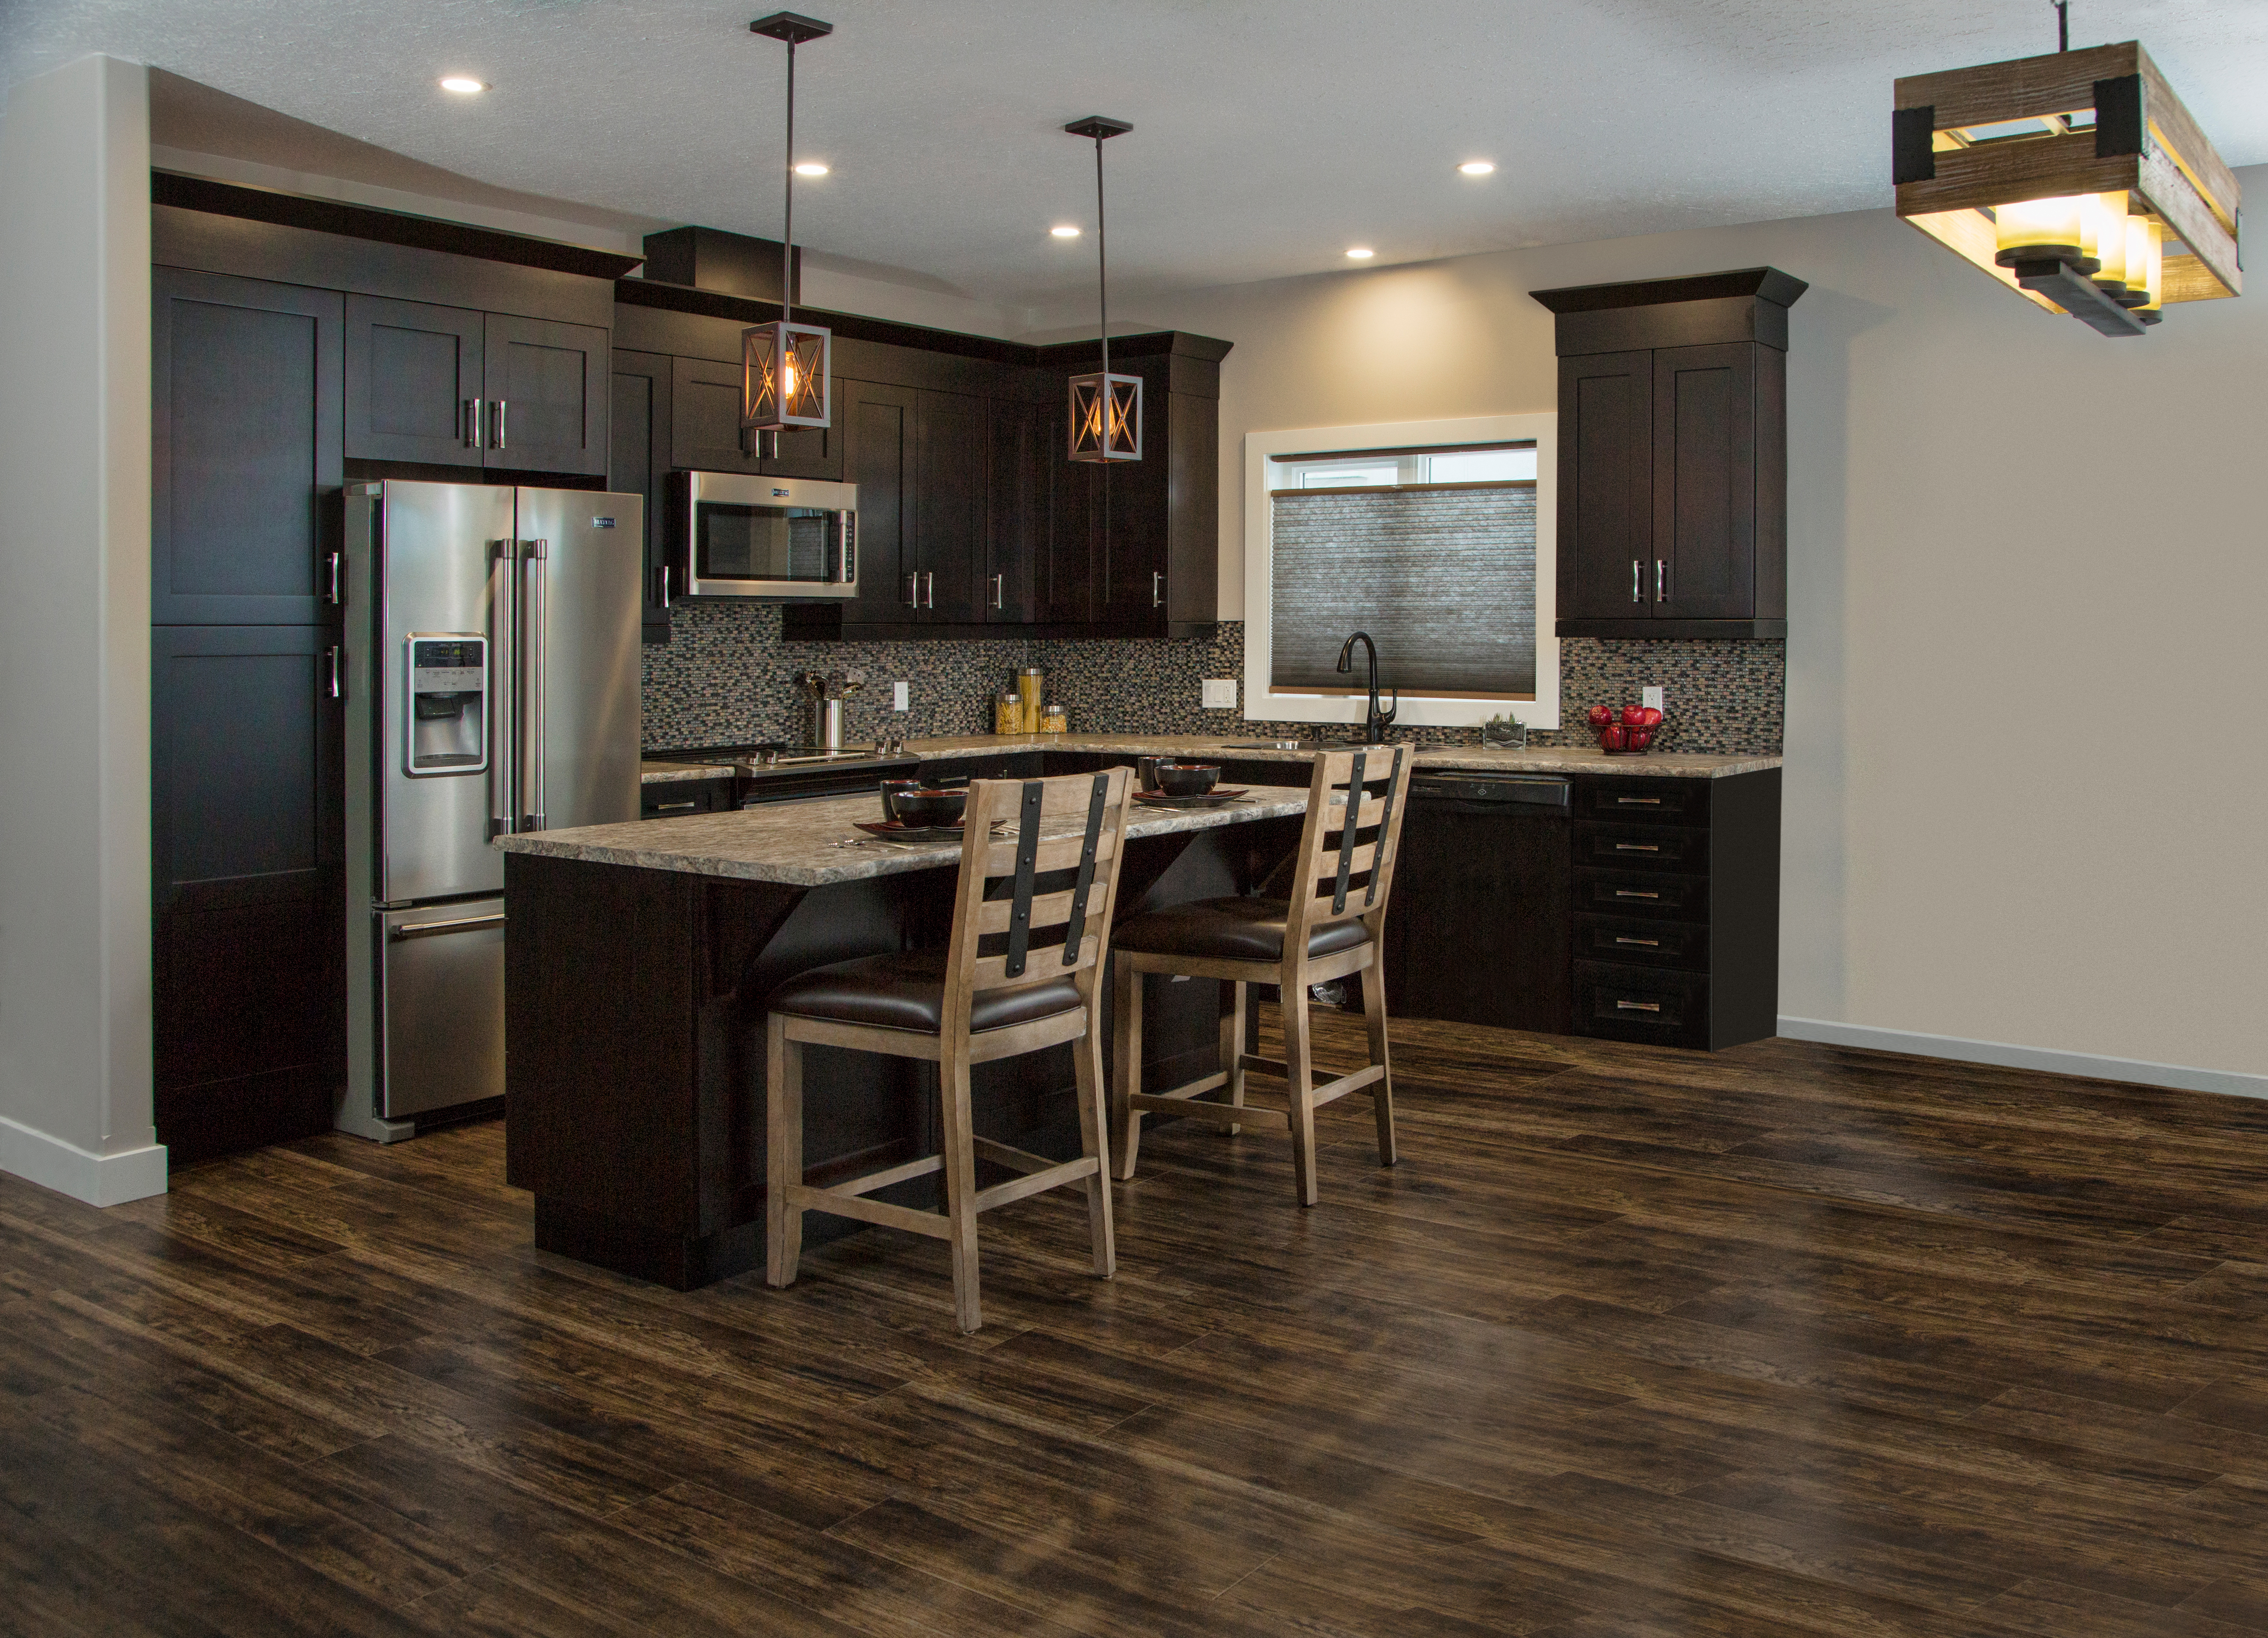 Kitchen with hardwood flooring and dark cabinets